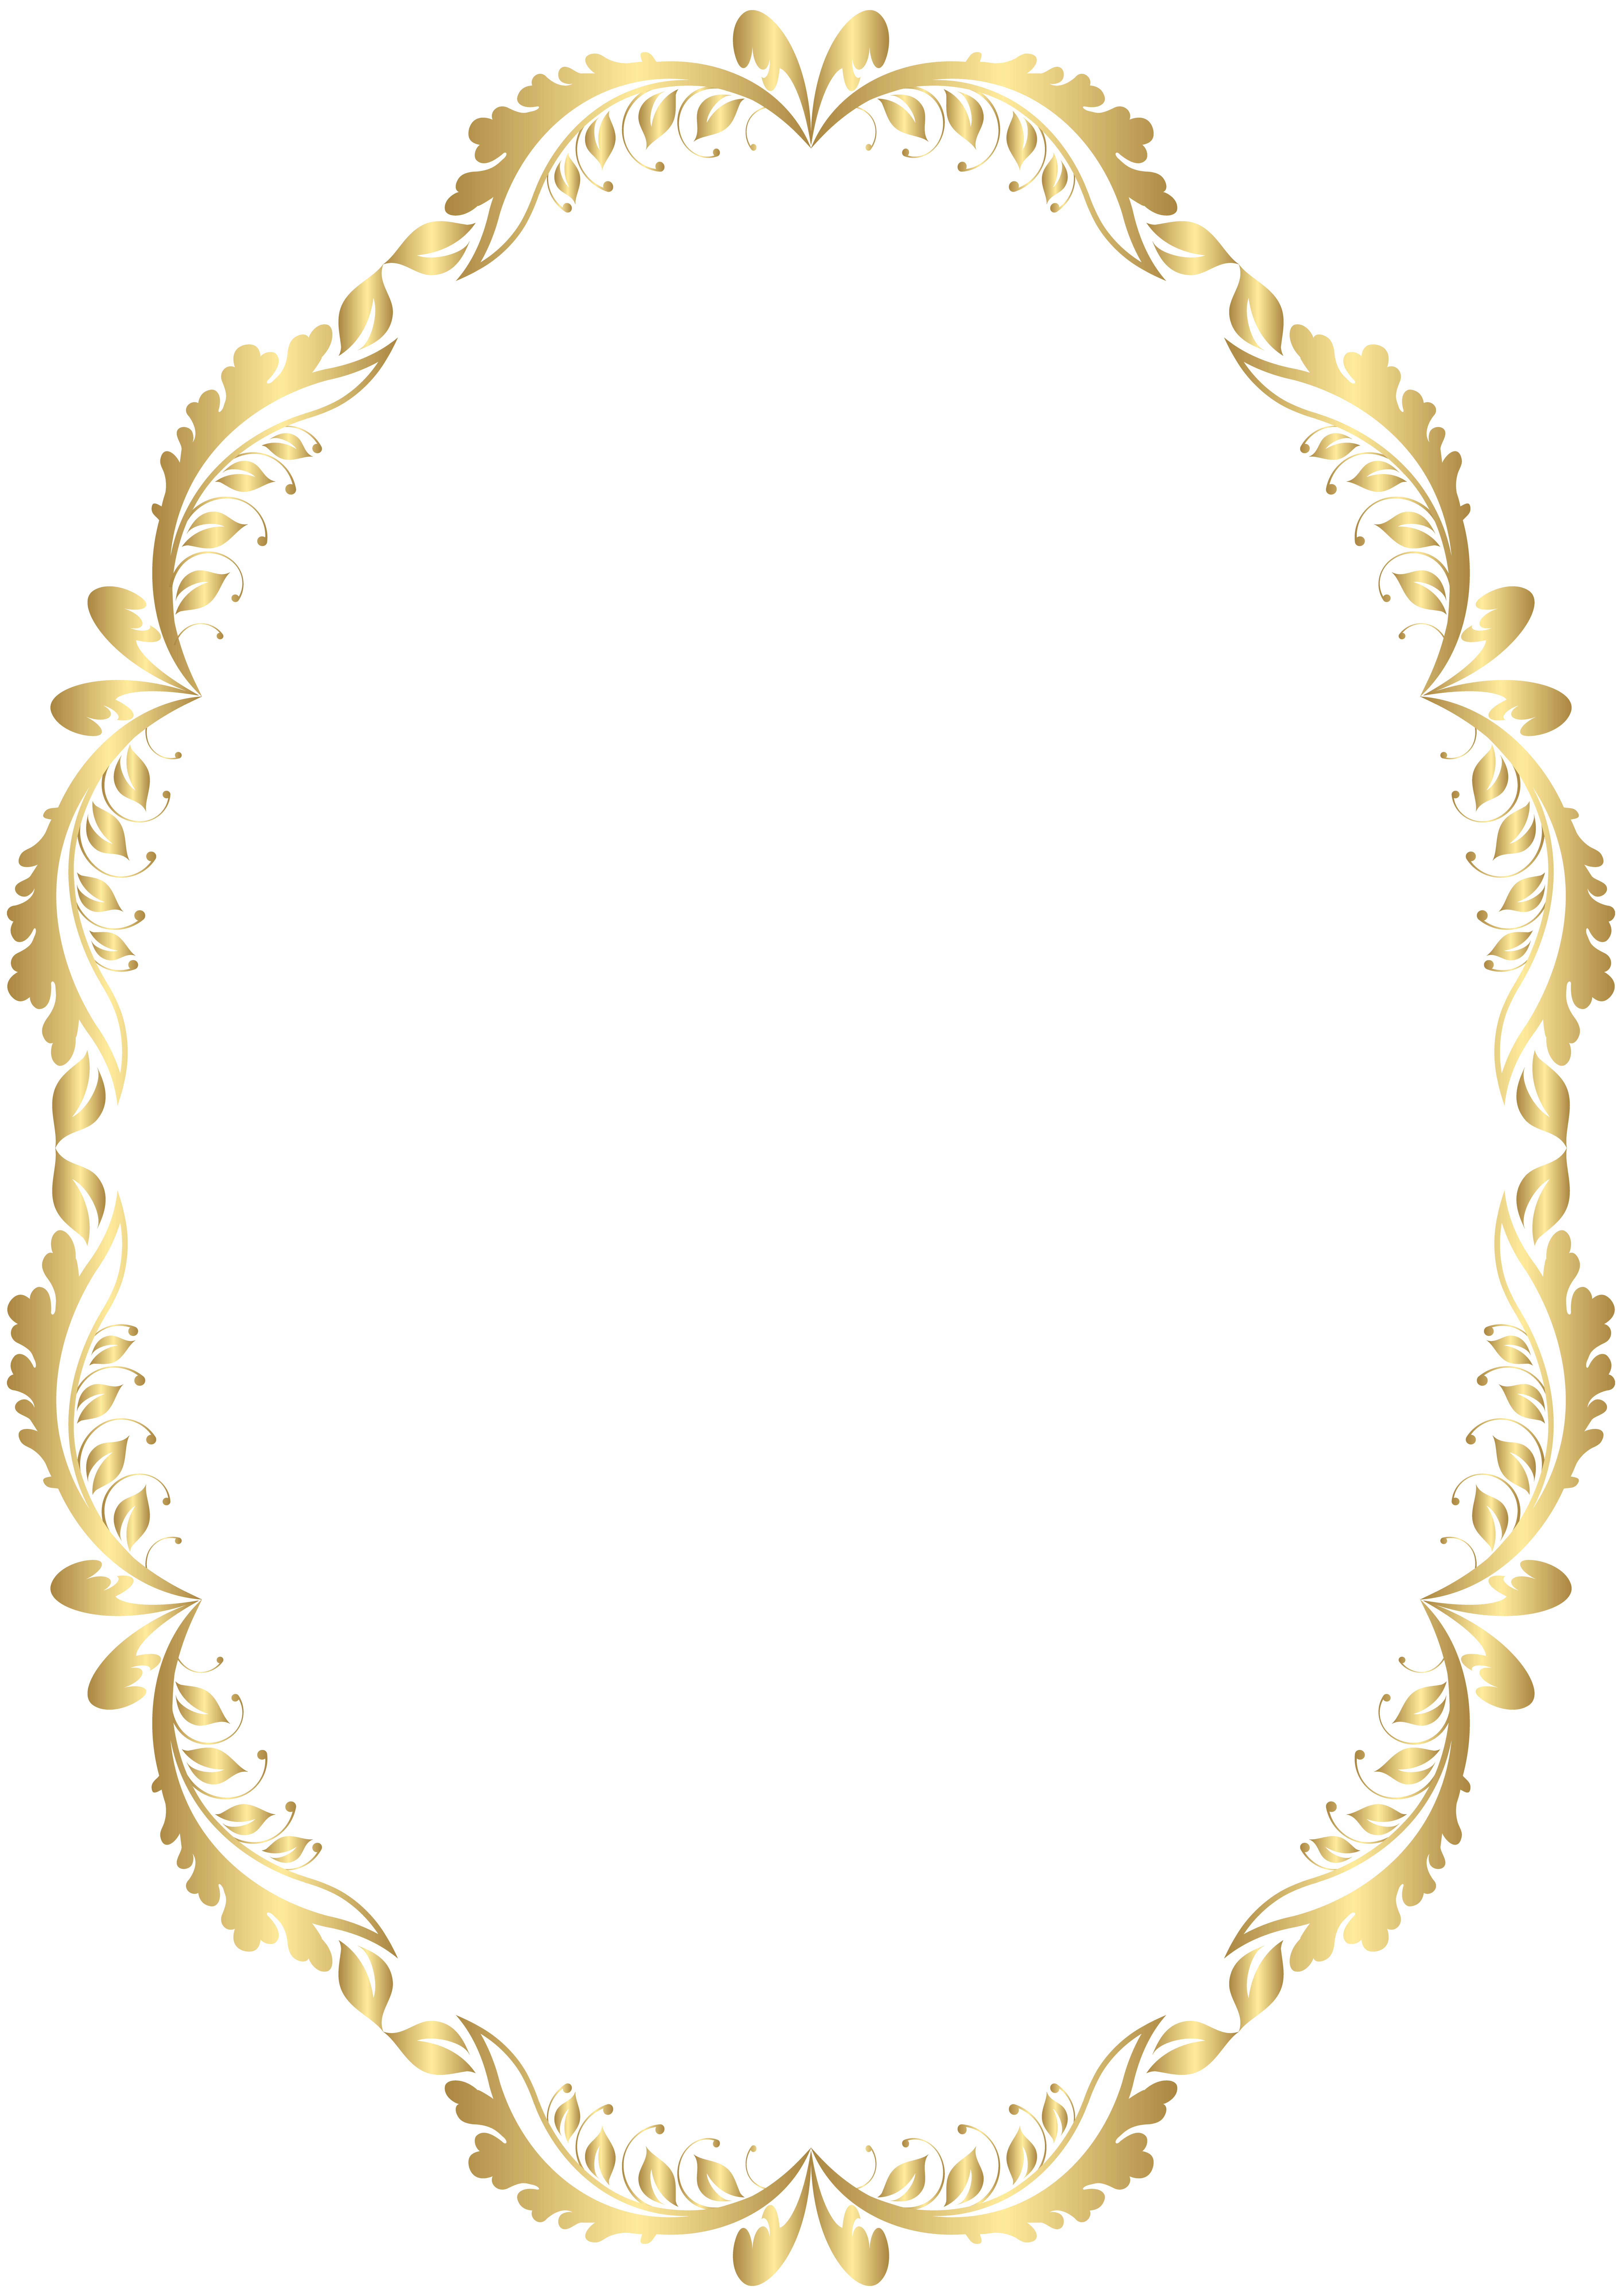 Mirror clipart golden mirror. Oval border transparent png